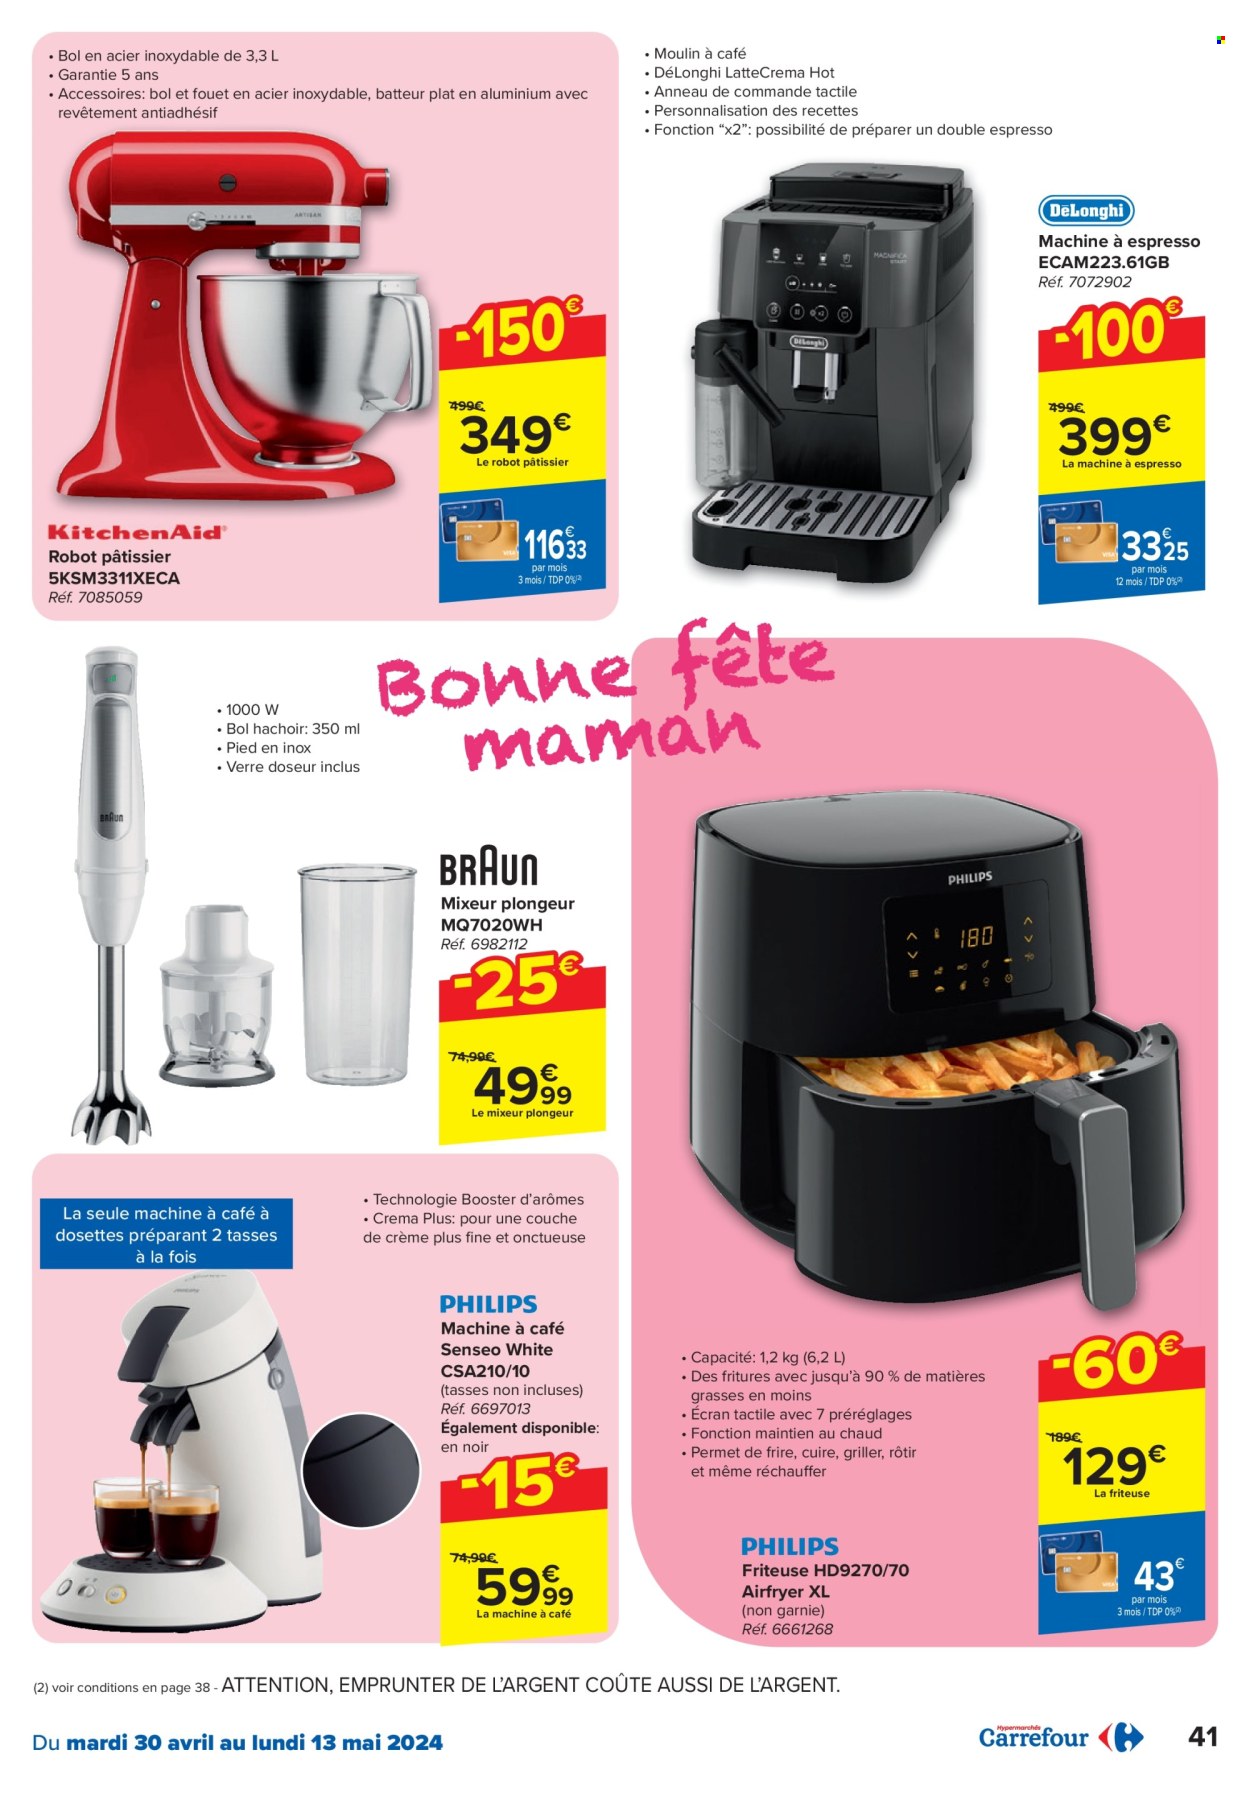 thumbnail - Carrefour hypermarkt-aanbieding - 30/04/2024 - 13/05/2024 -  producten in de aanbieding - Espresso, DeLonghi, Senseo, airfryer, friteuse, robot. Pagina 41.